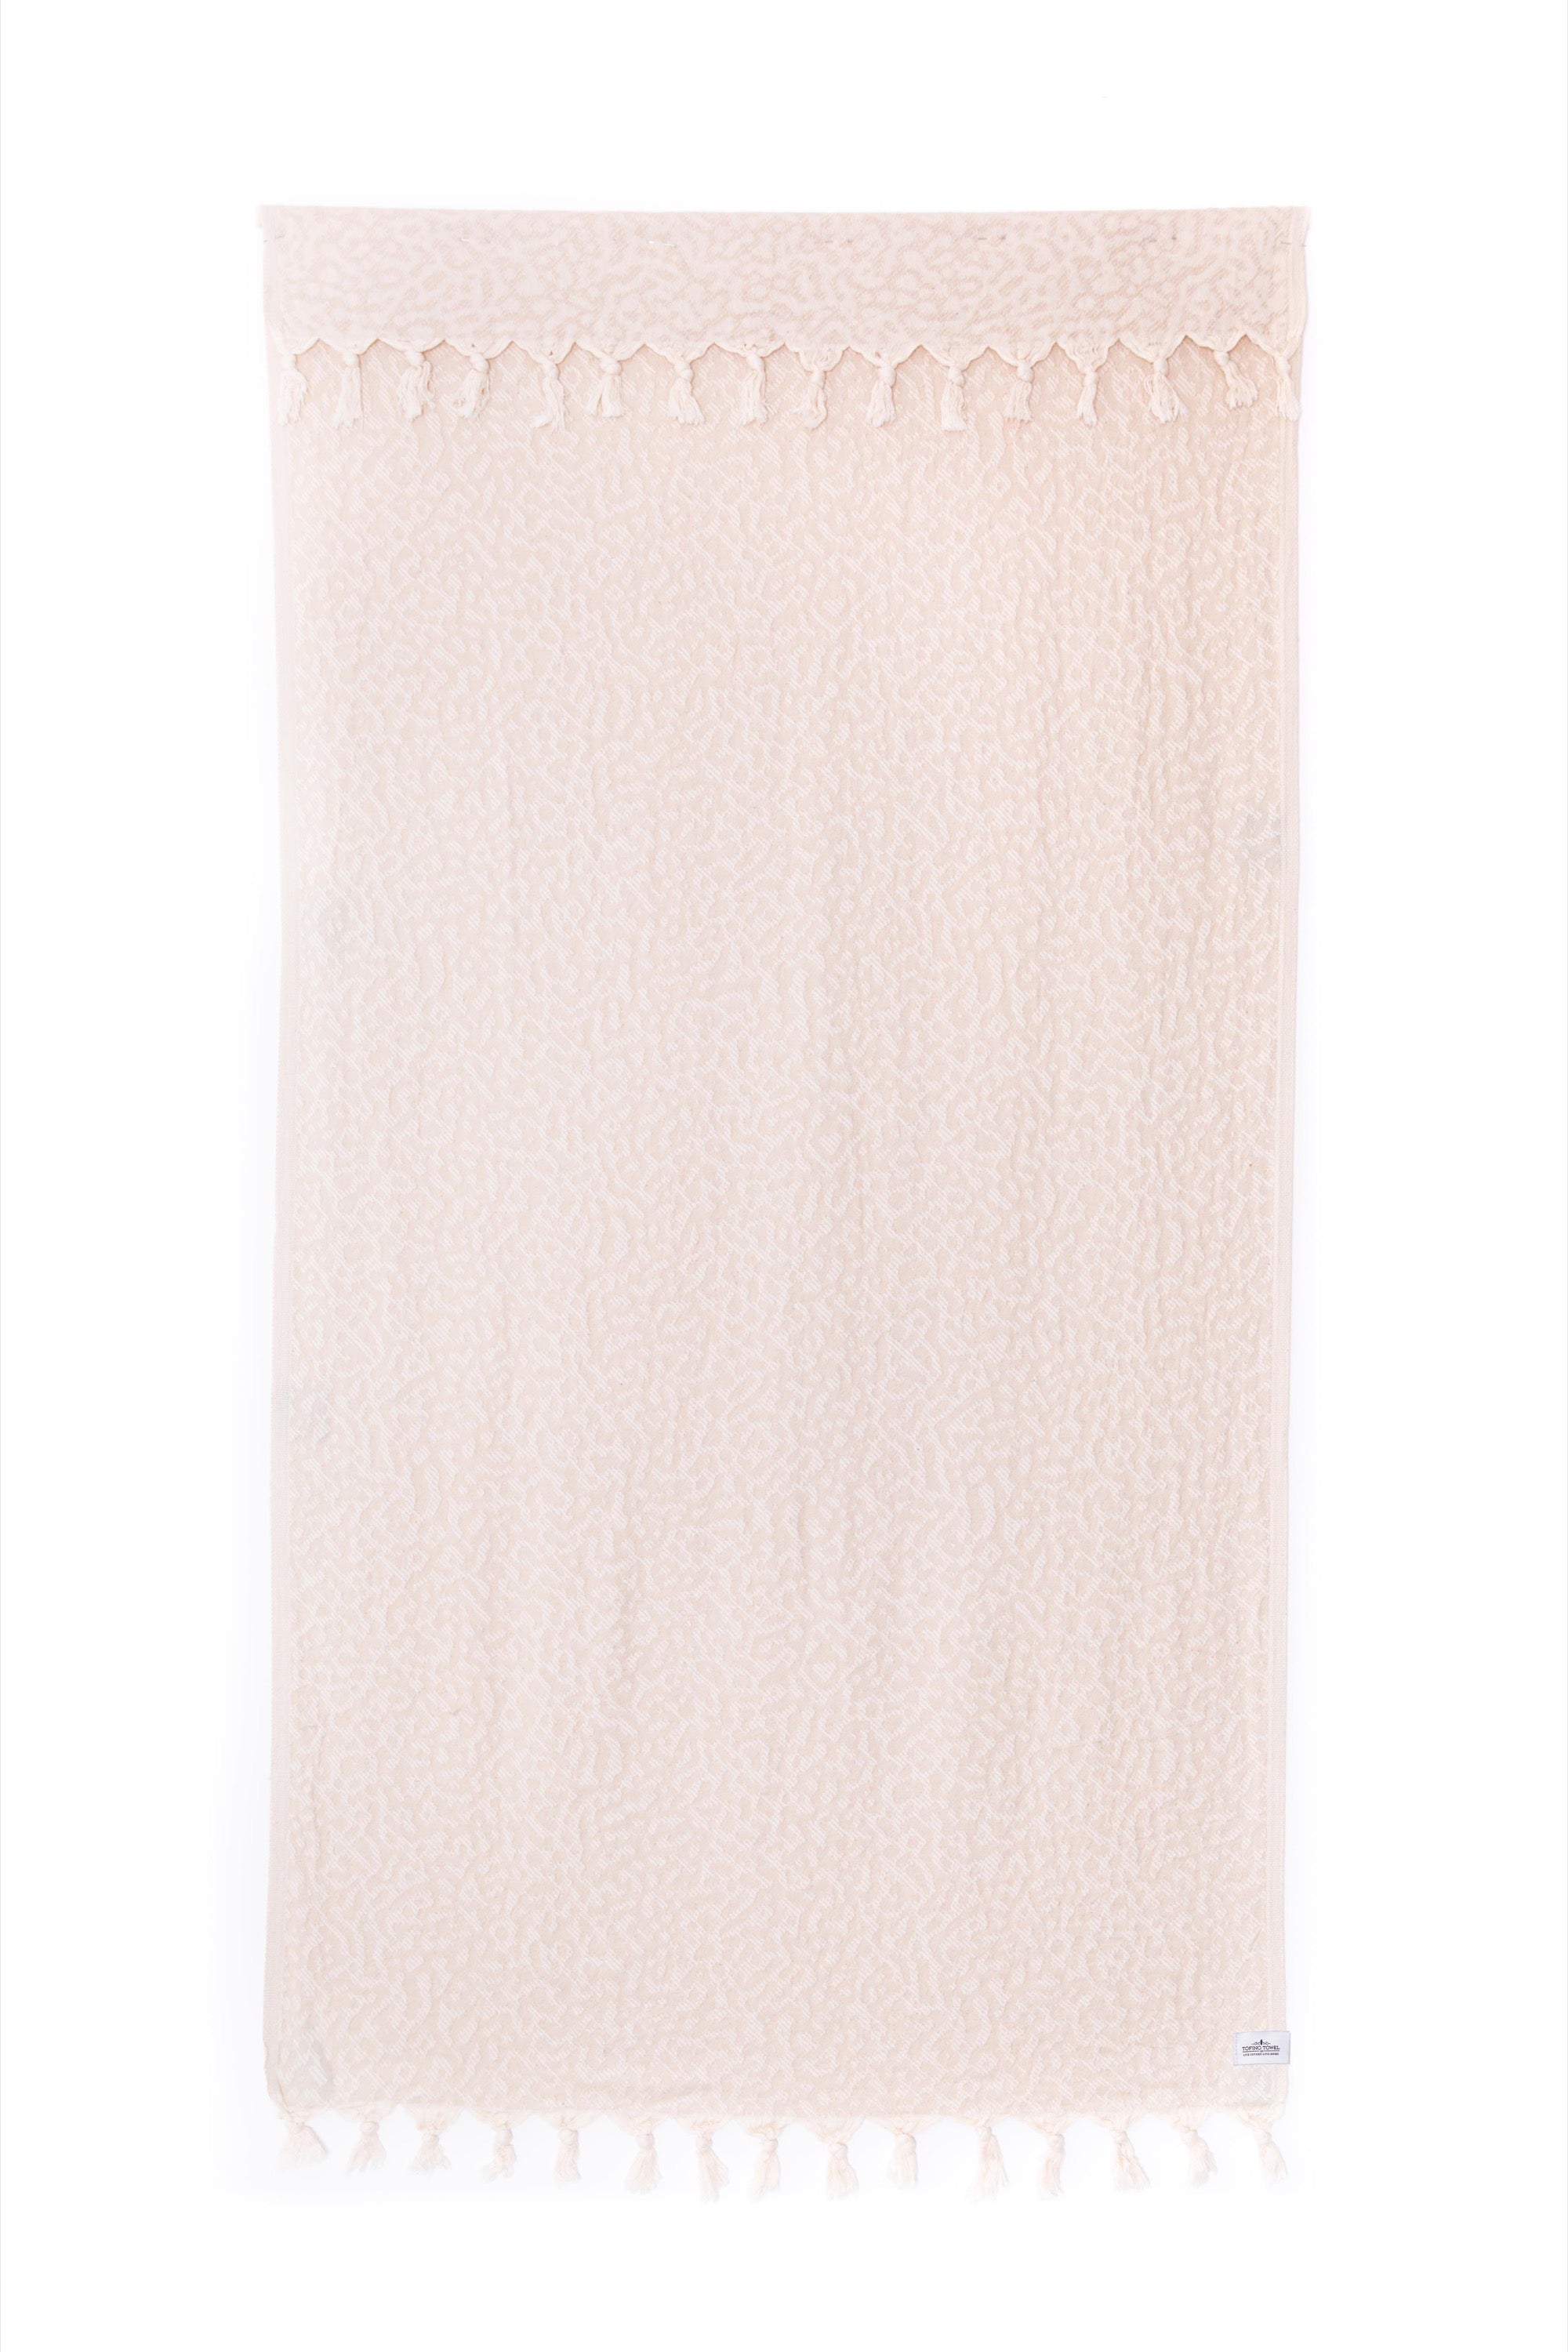 THE BANYAN | Turkish Towel – Tofino Towel Co.